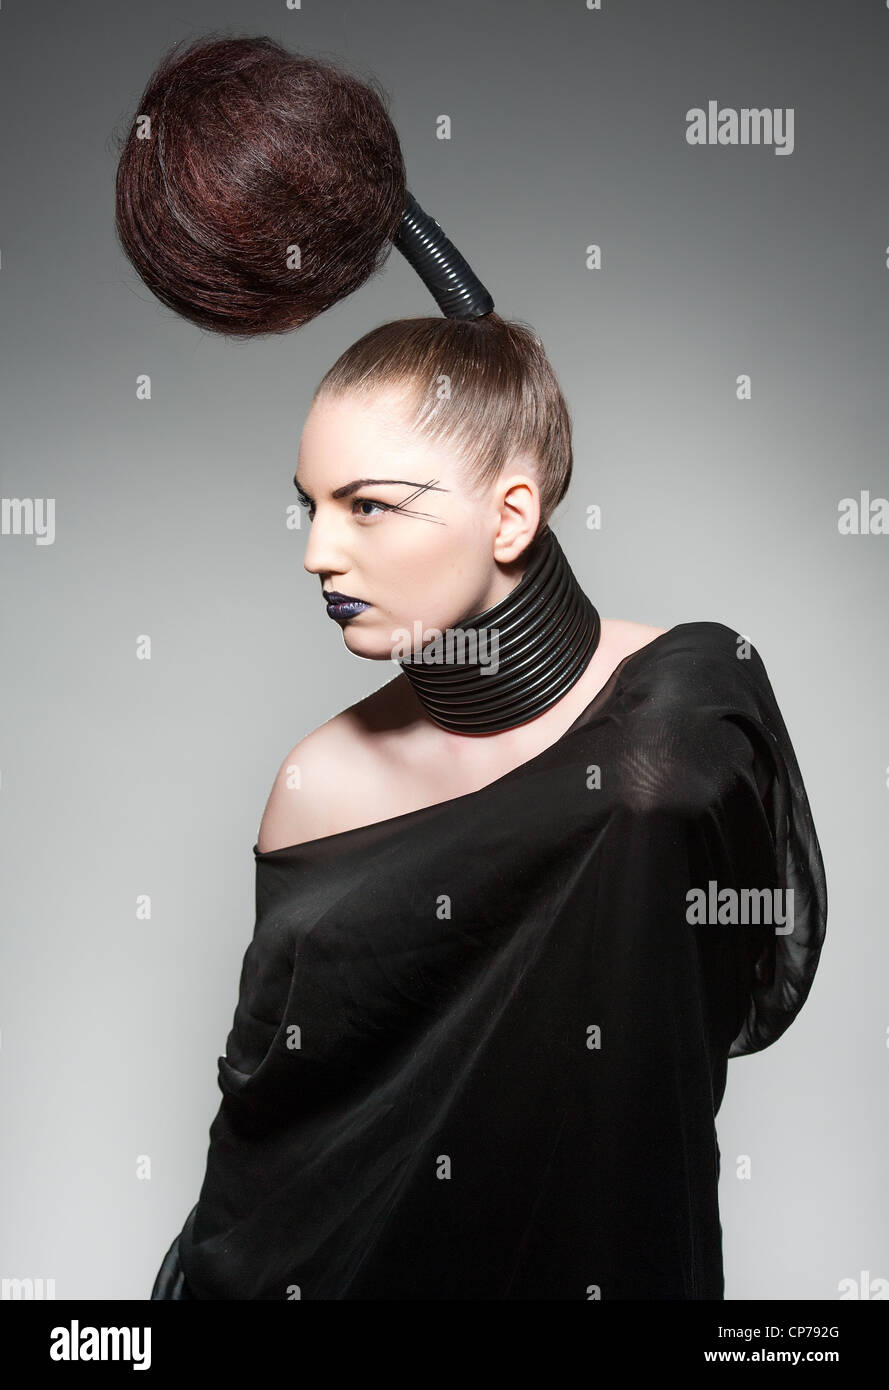 a crazy avant garde hairstyle Stock Photo - Alamy